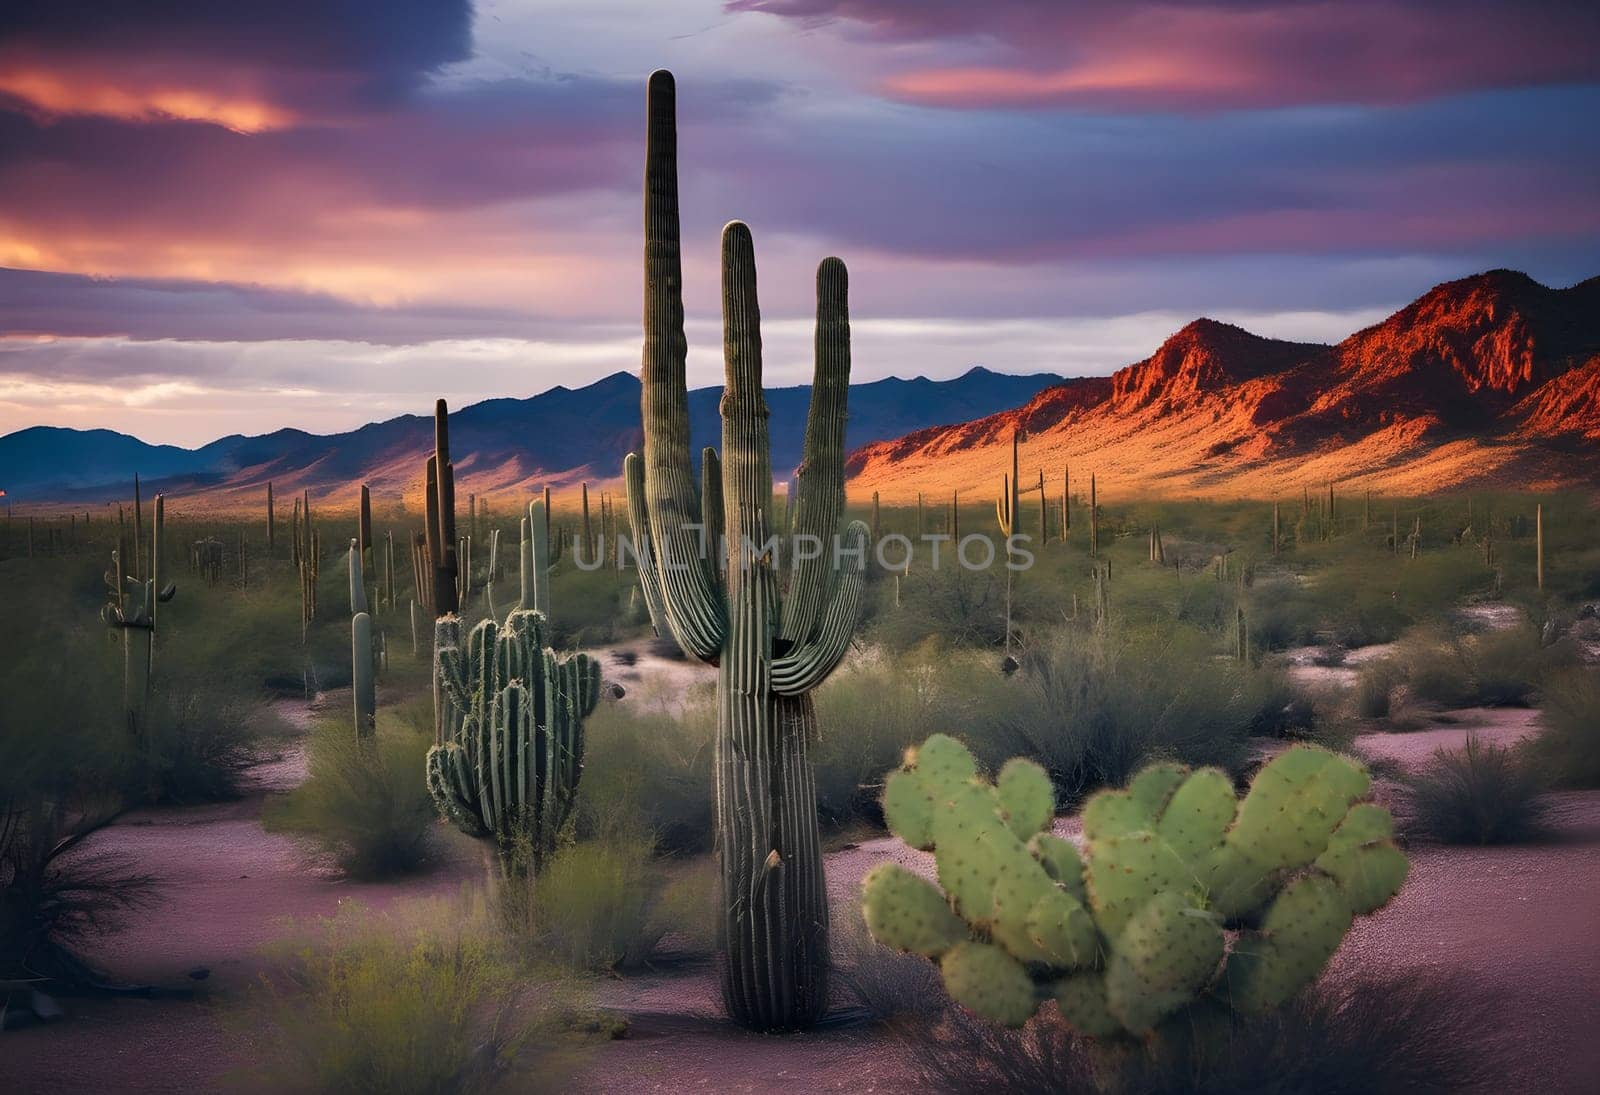 Desert Dreams: Saguaro Silhouettes in Arizona's Sunset by Petrichor